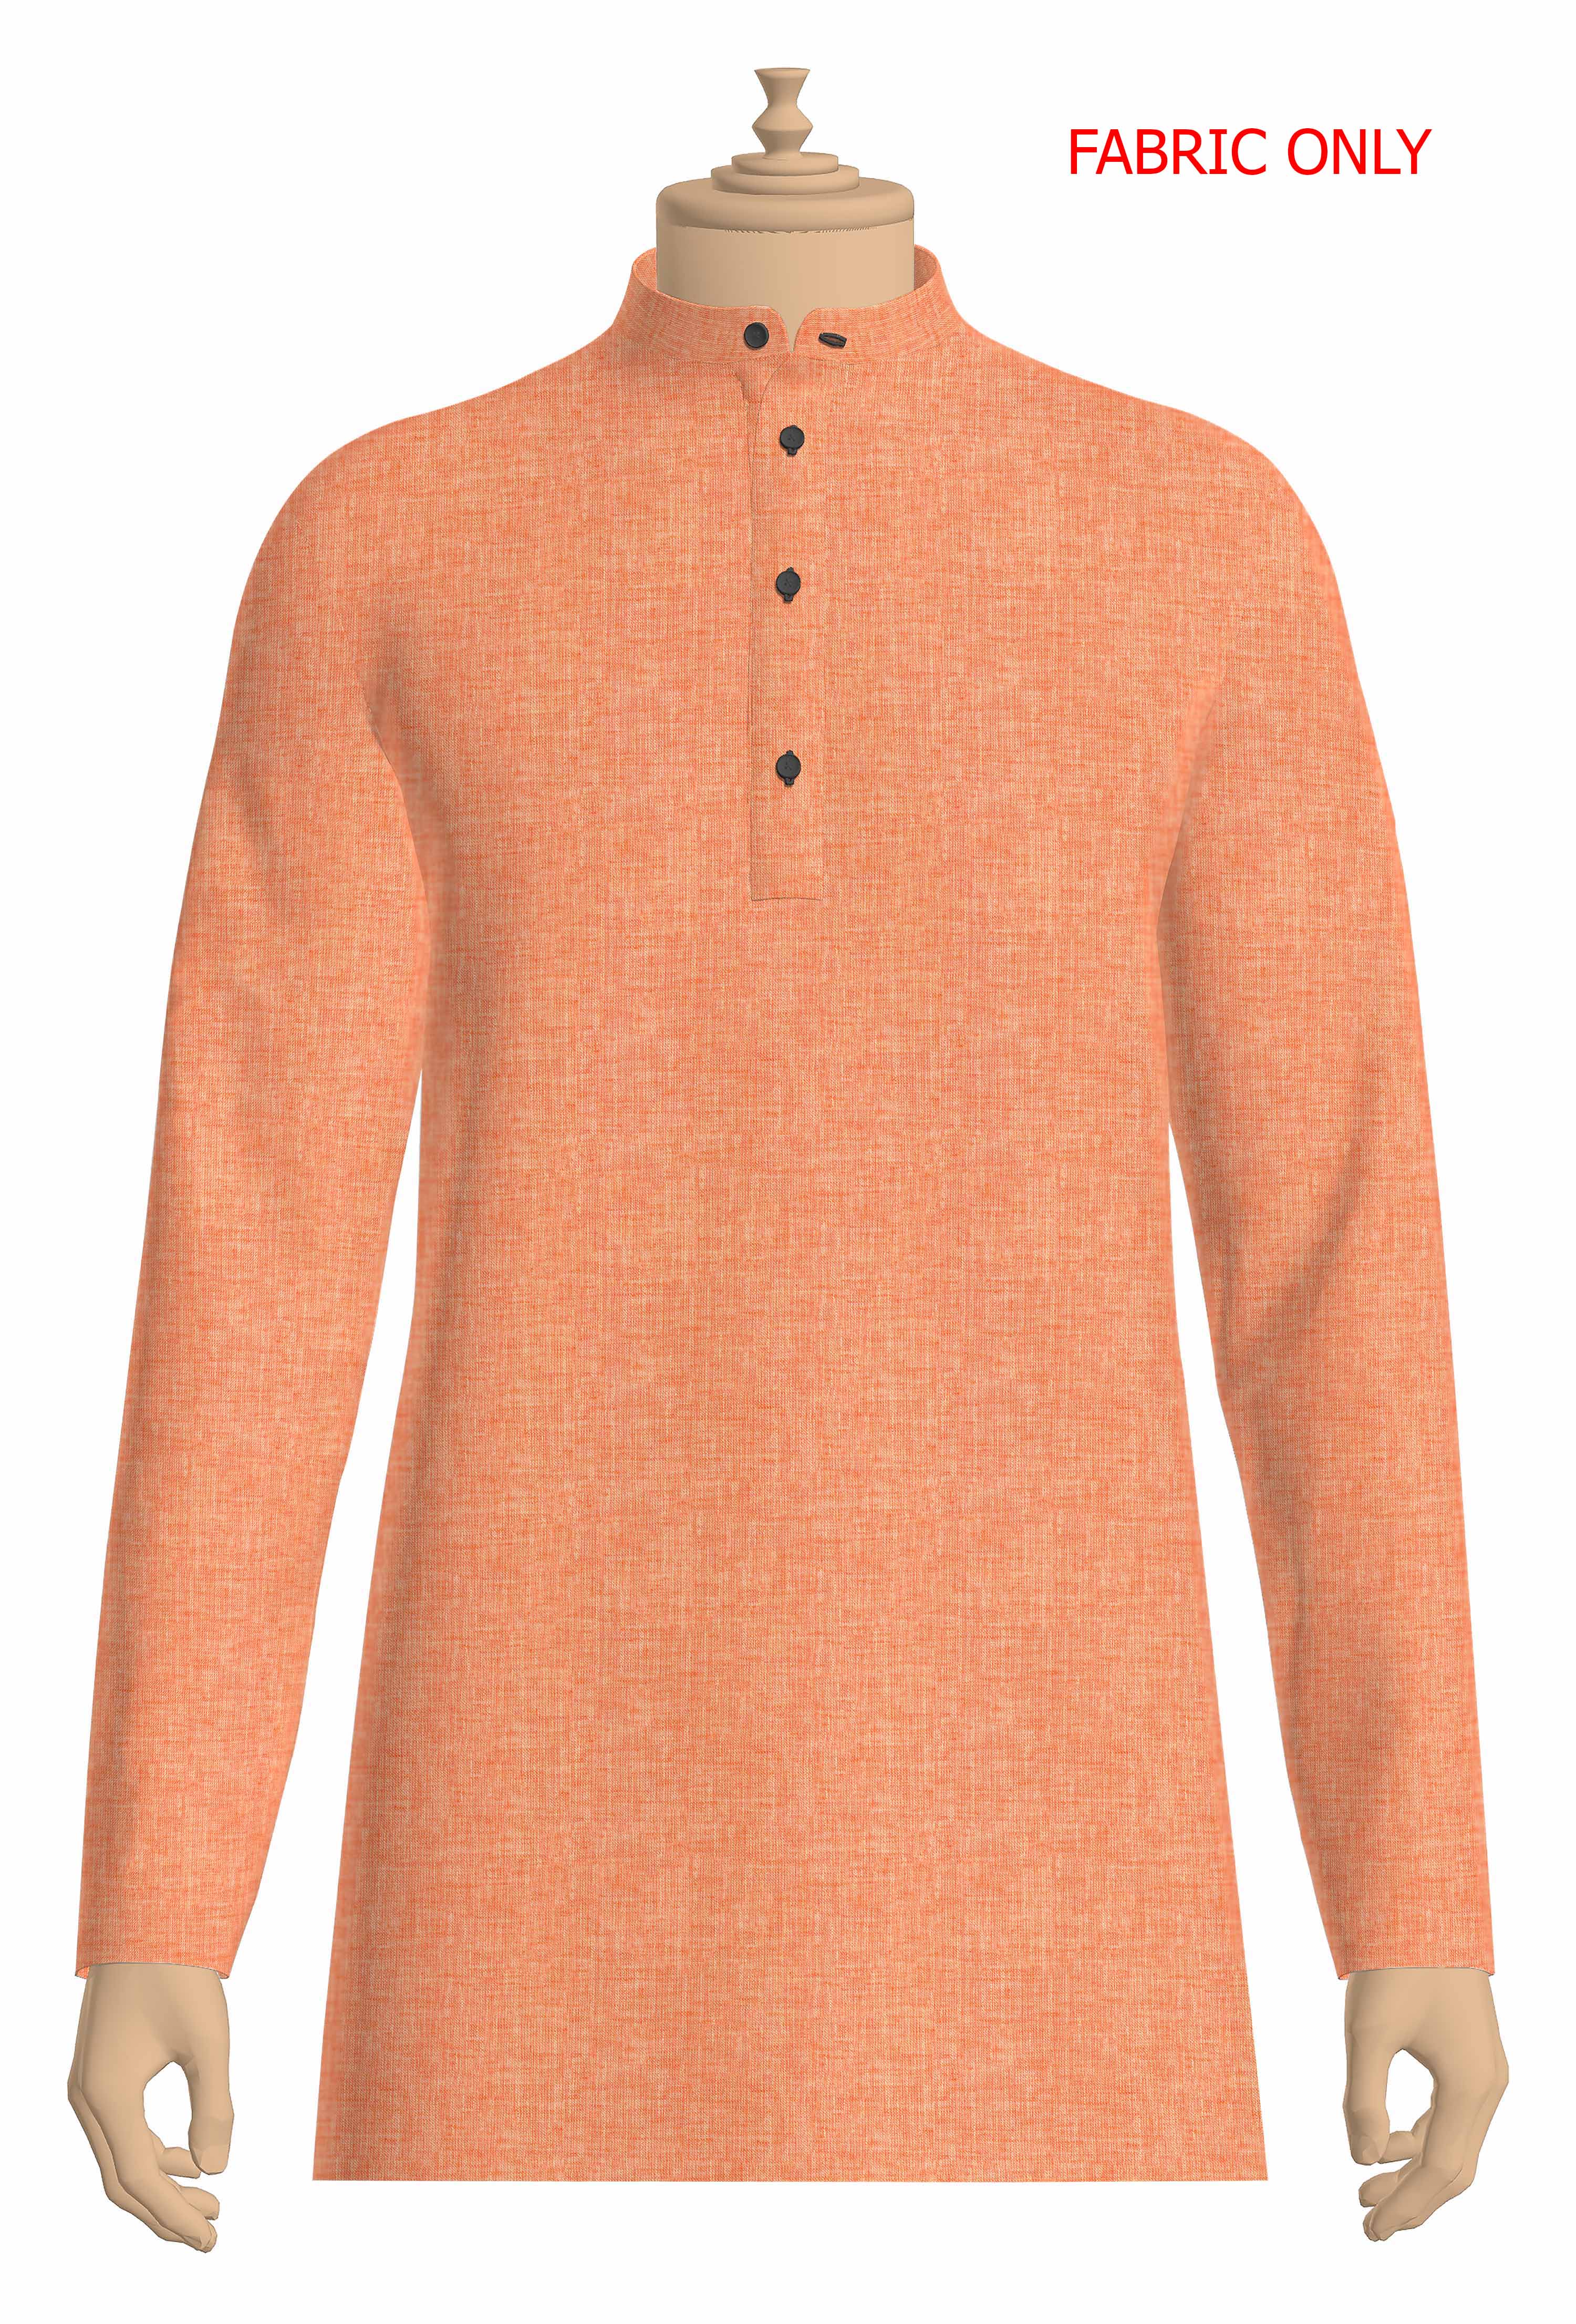 Cotton Blend Lite Orange Colour Kurtha Fabric Lampus - CAPC1160-10